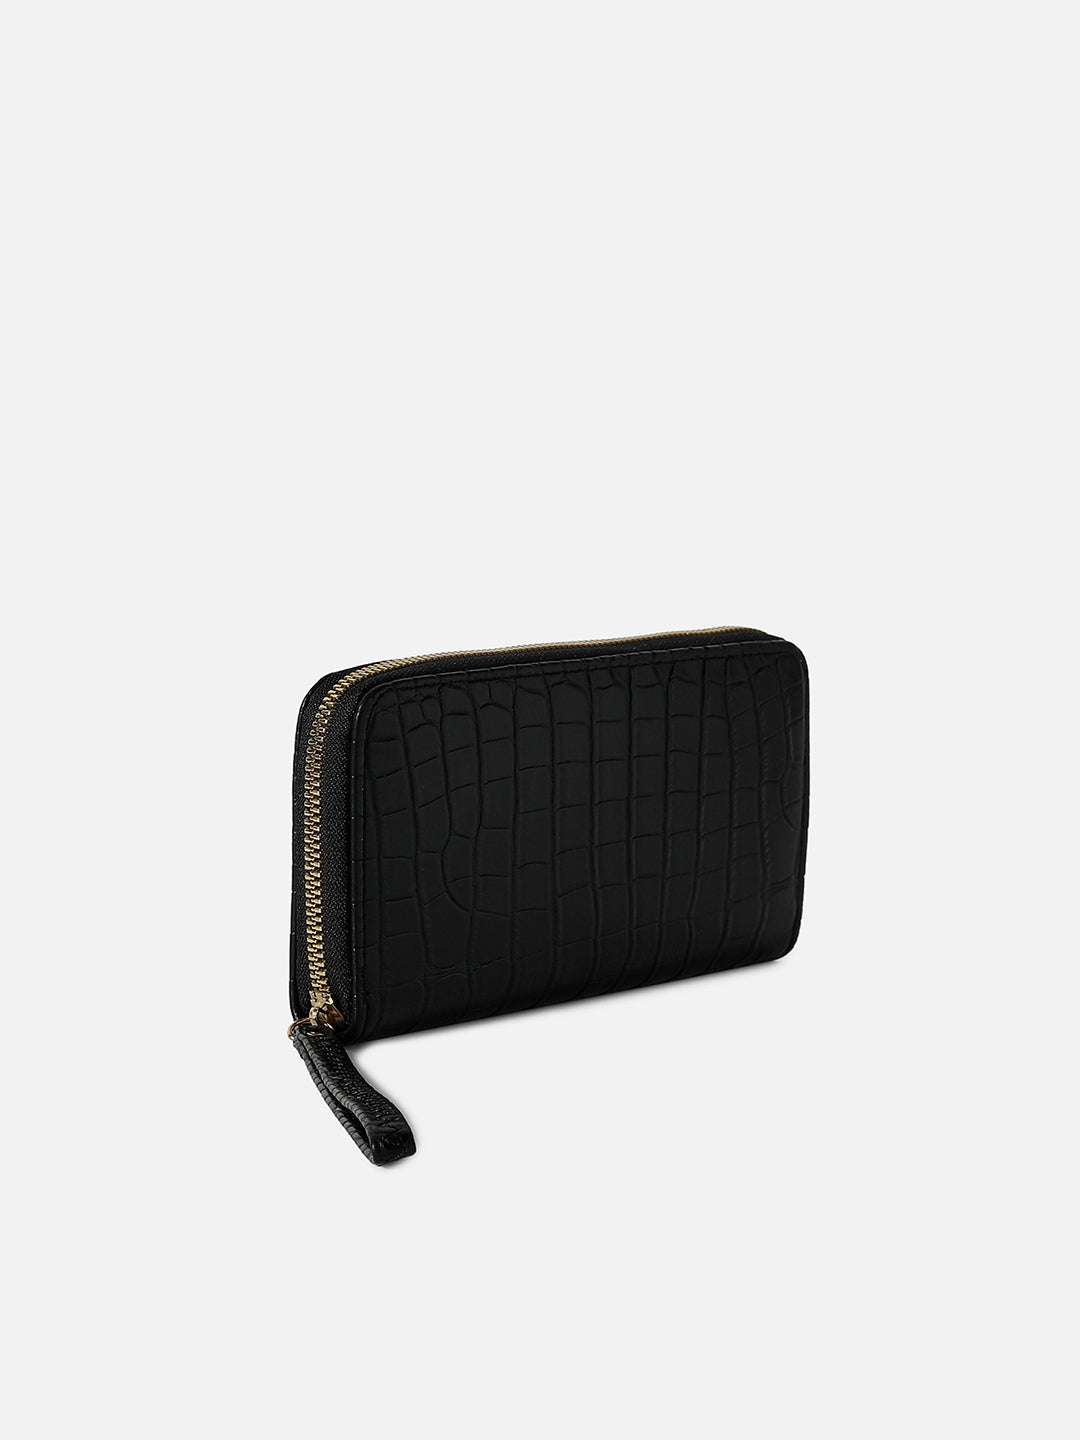 Black Textured Vegan Leather Wallet